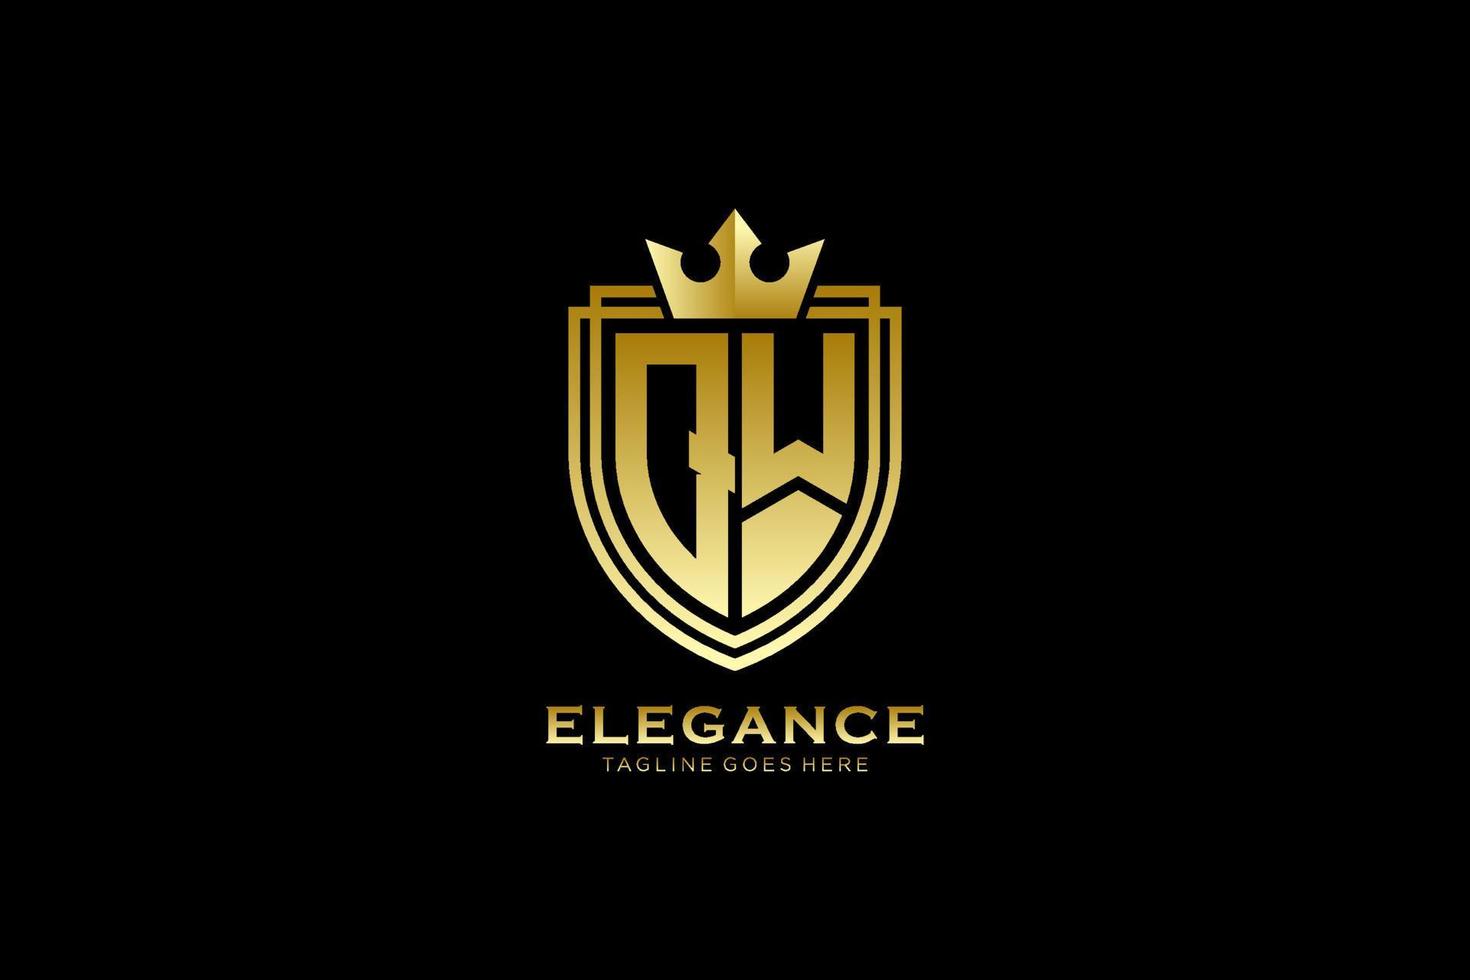 inicial qw elegante logotipo de monograma de luxo ou modelo de crachá com pergaminhos e coroa real - perfeito para projetos de marca luxuosos vetor